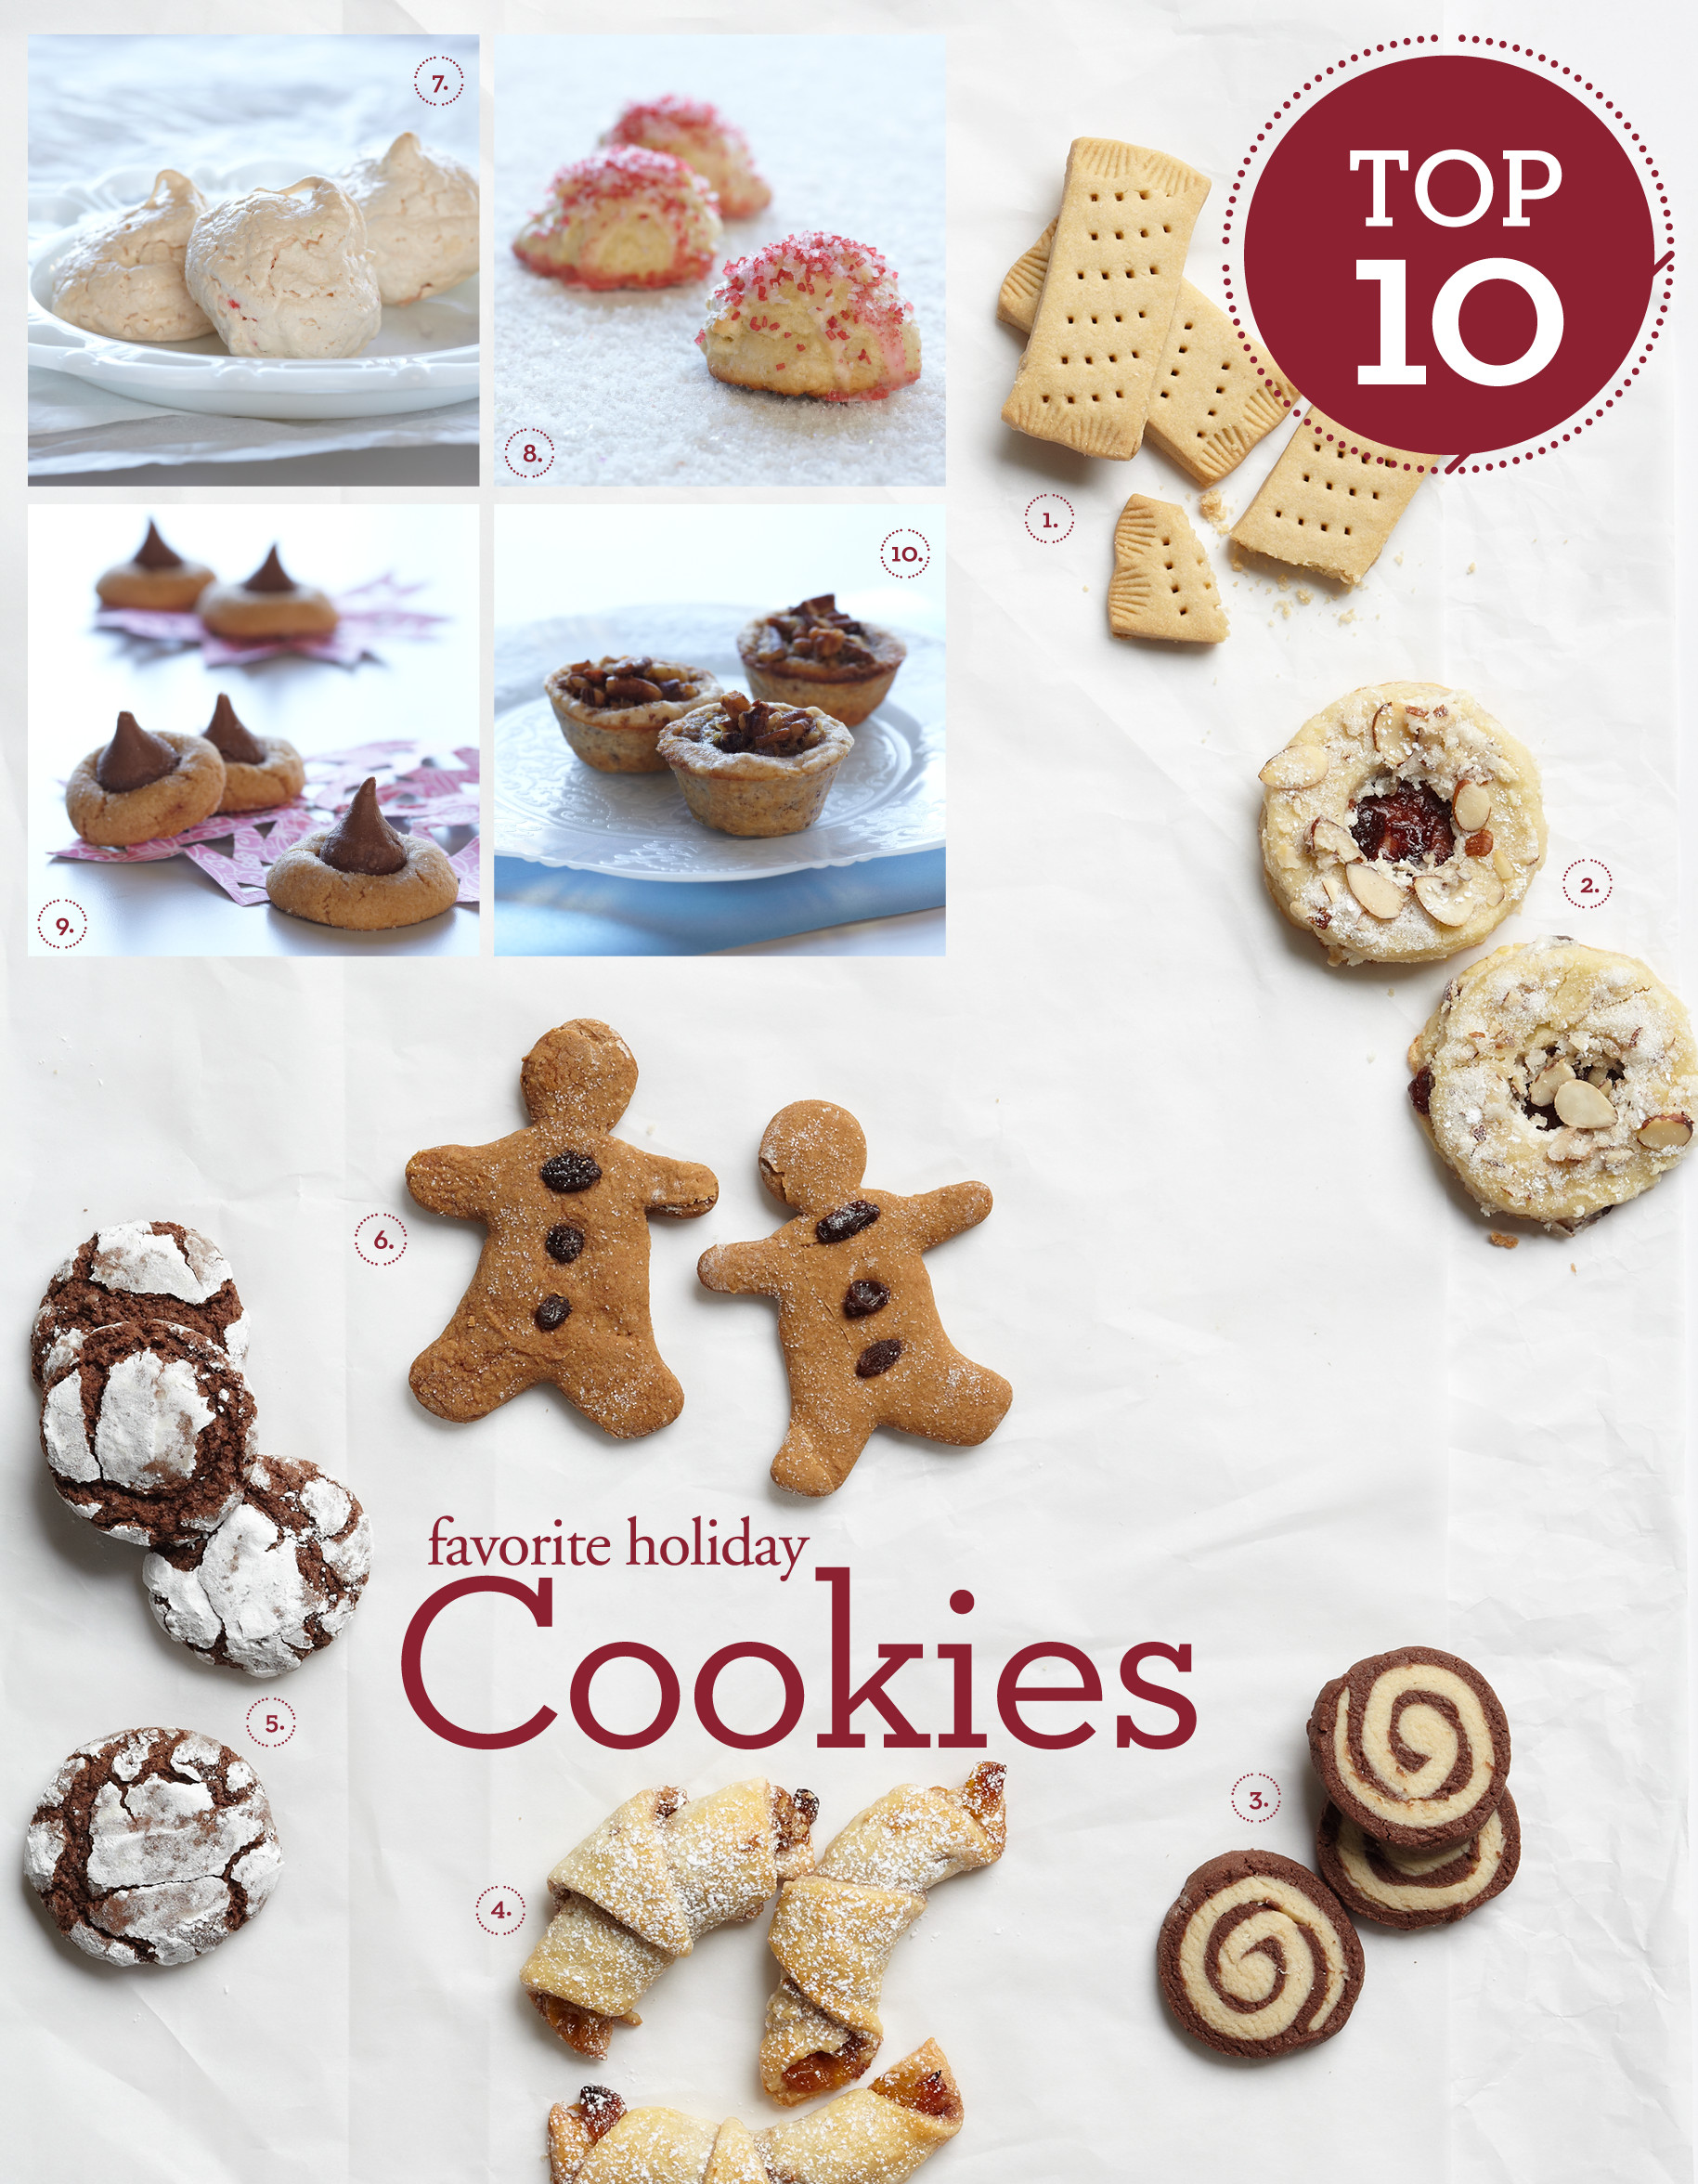 Top 10 Christmas Cookies
 Top 10 Favorite Holiday Cookies by Oak Express